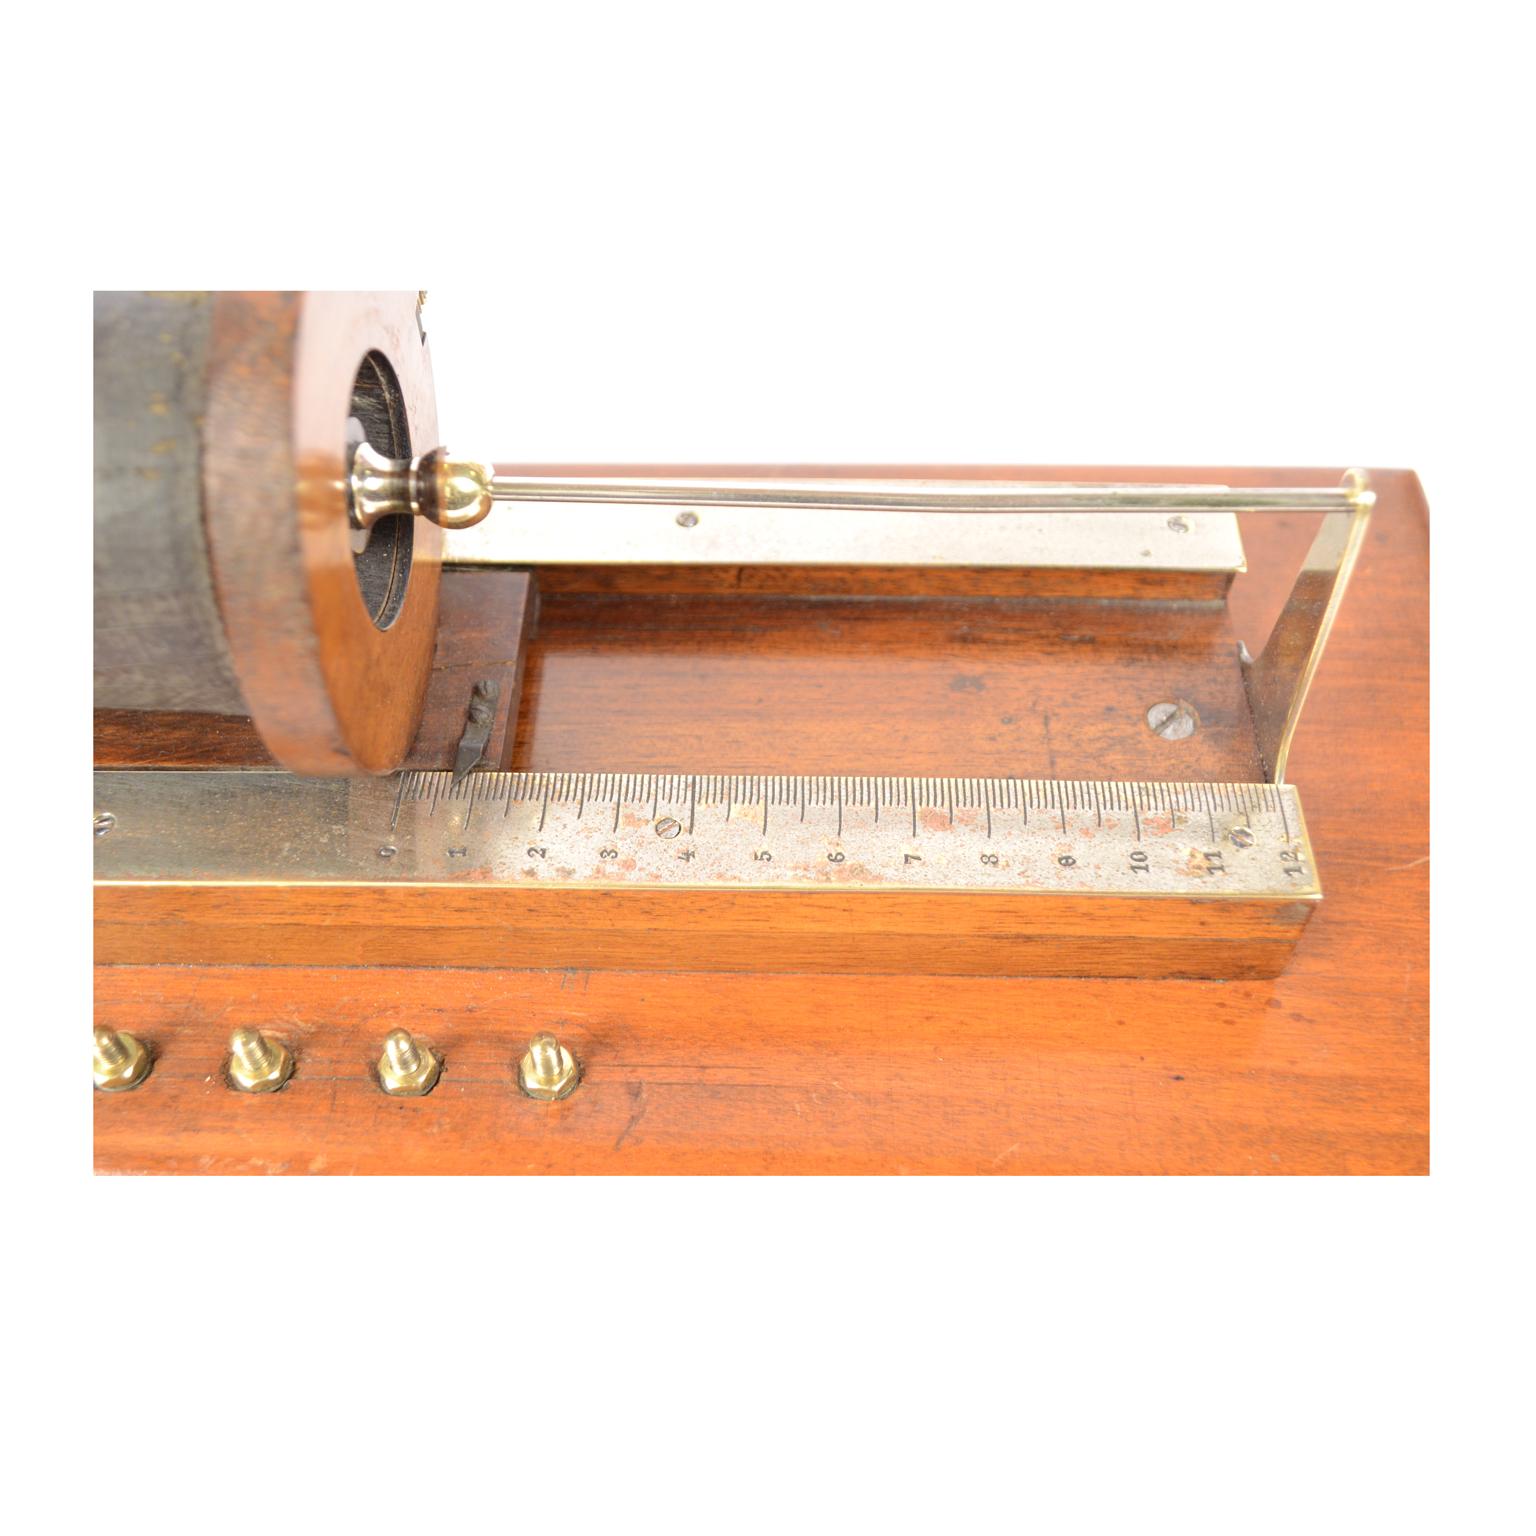 Induction Coil or Sled Antique Scientific Instrument by Du Bois Reymond 1870  For Sale 4